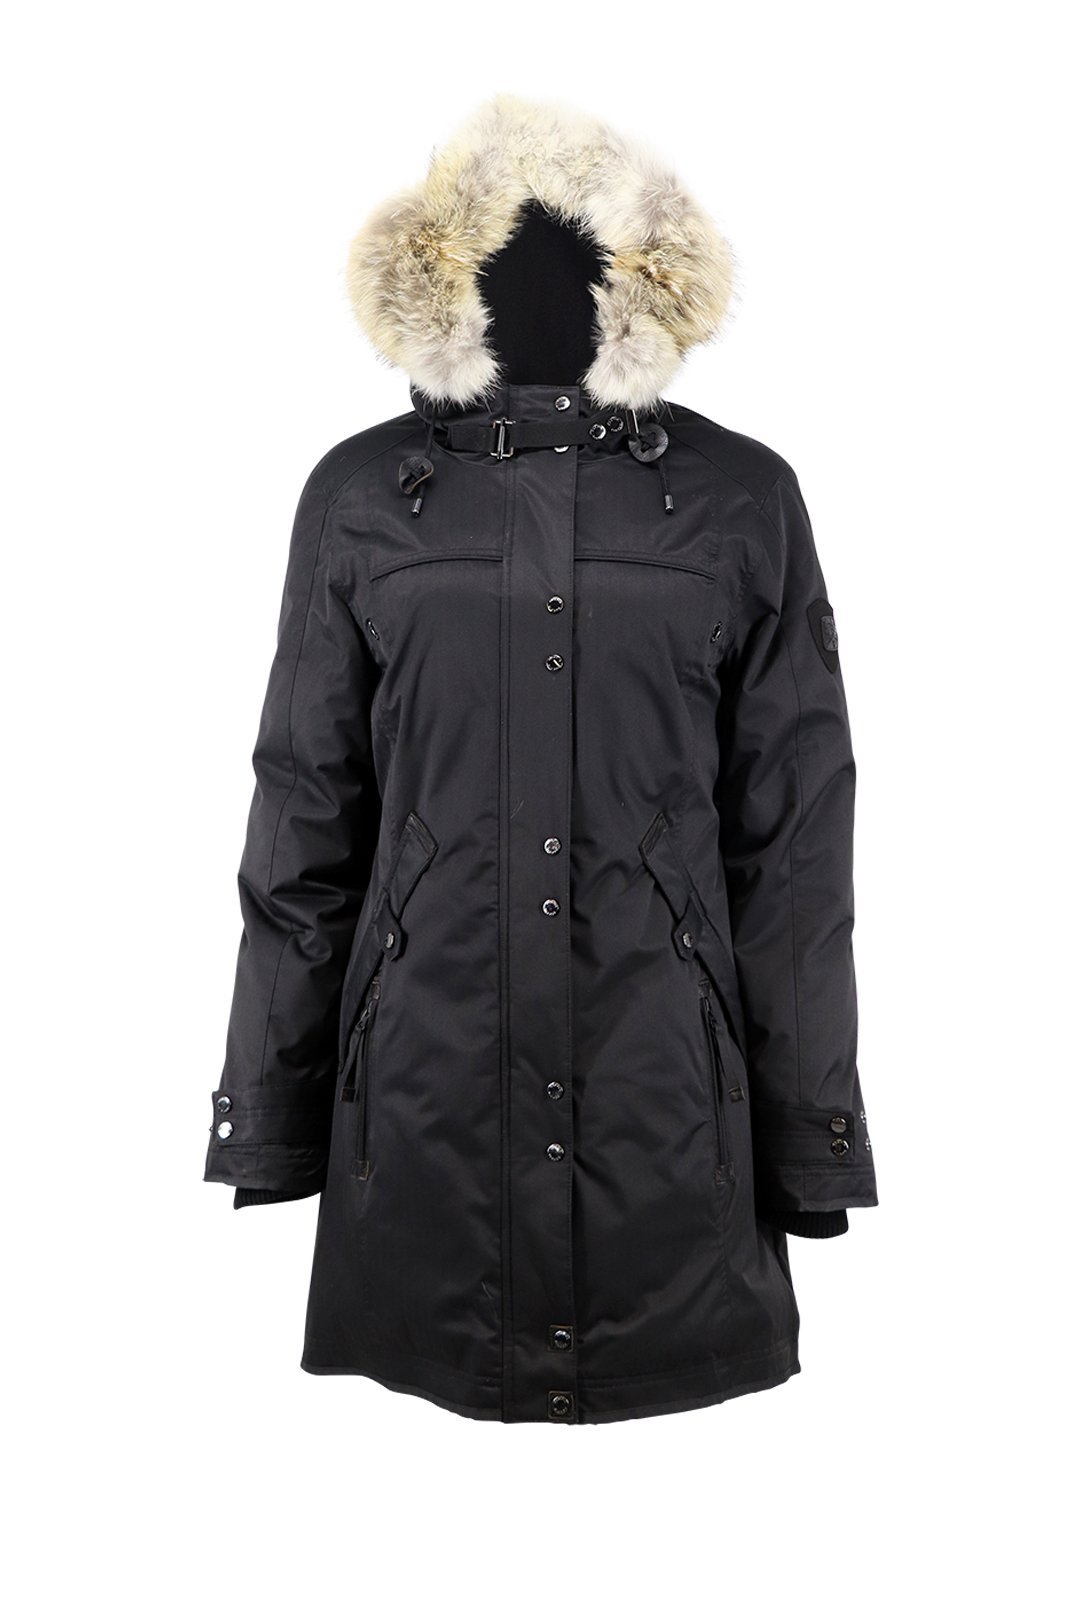 uhnmki Womens Plus Size Tops Shirt Autumn Winter Coat Lapel Single